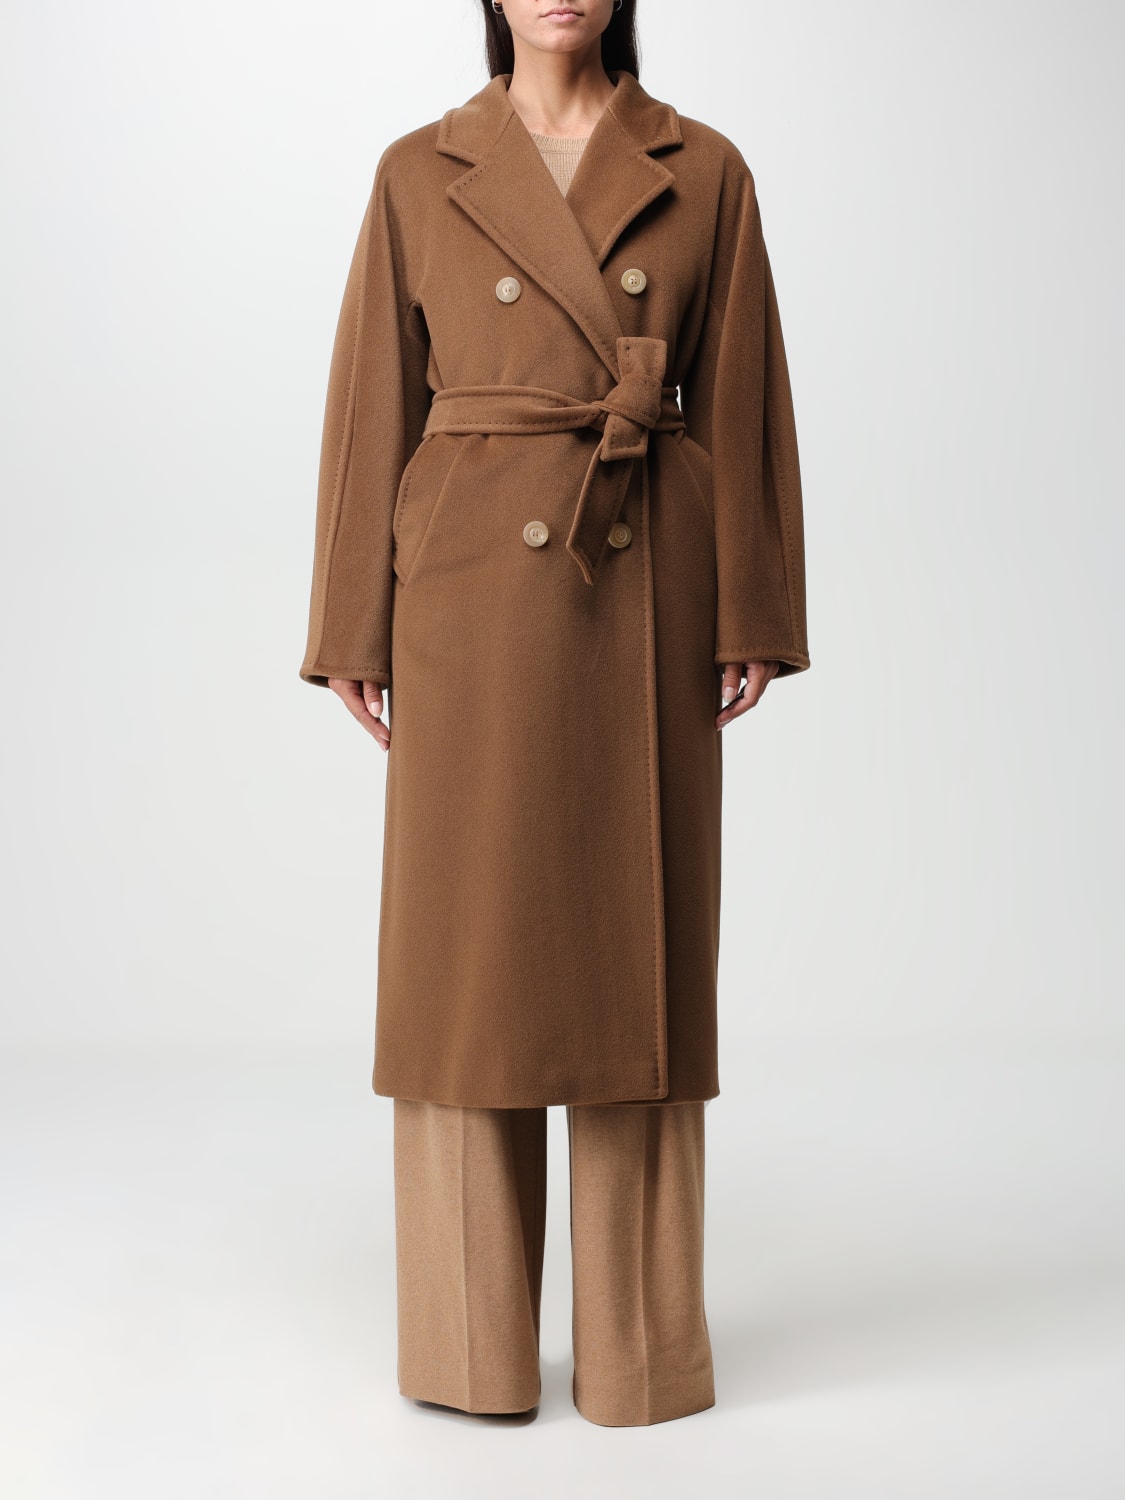 MAX MARA: Madame coat in wool blend - Leather | Max Mara coat ...